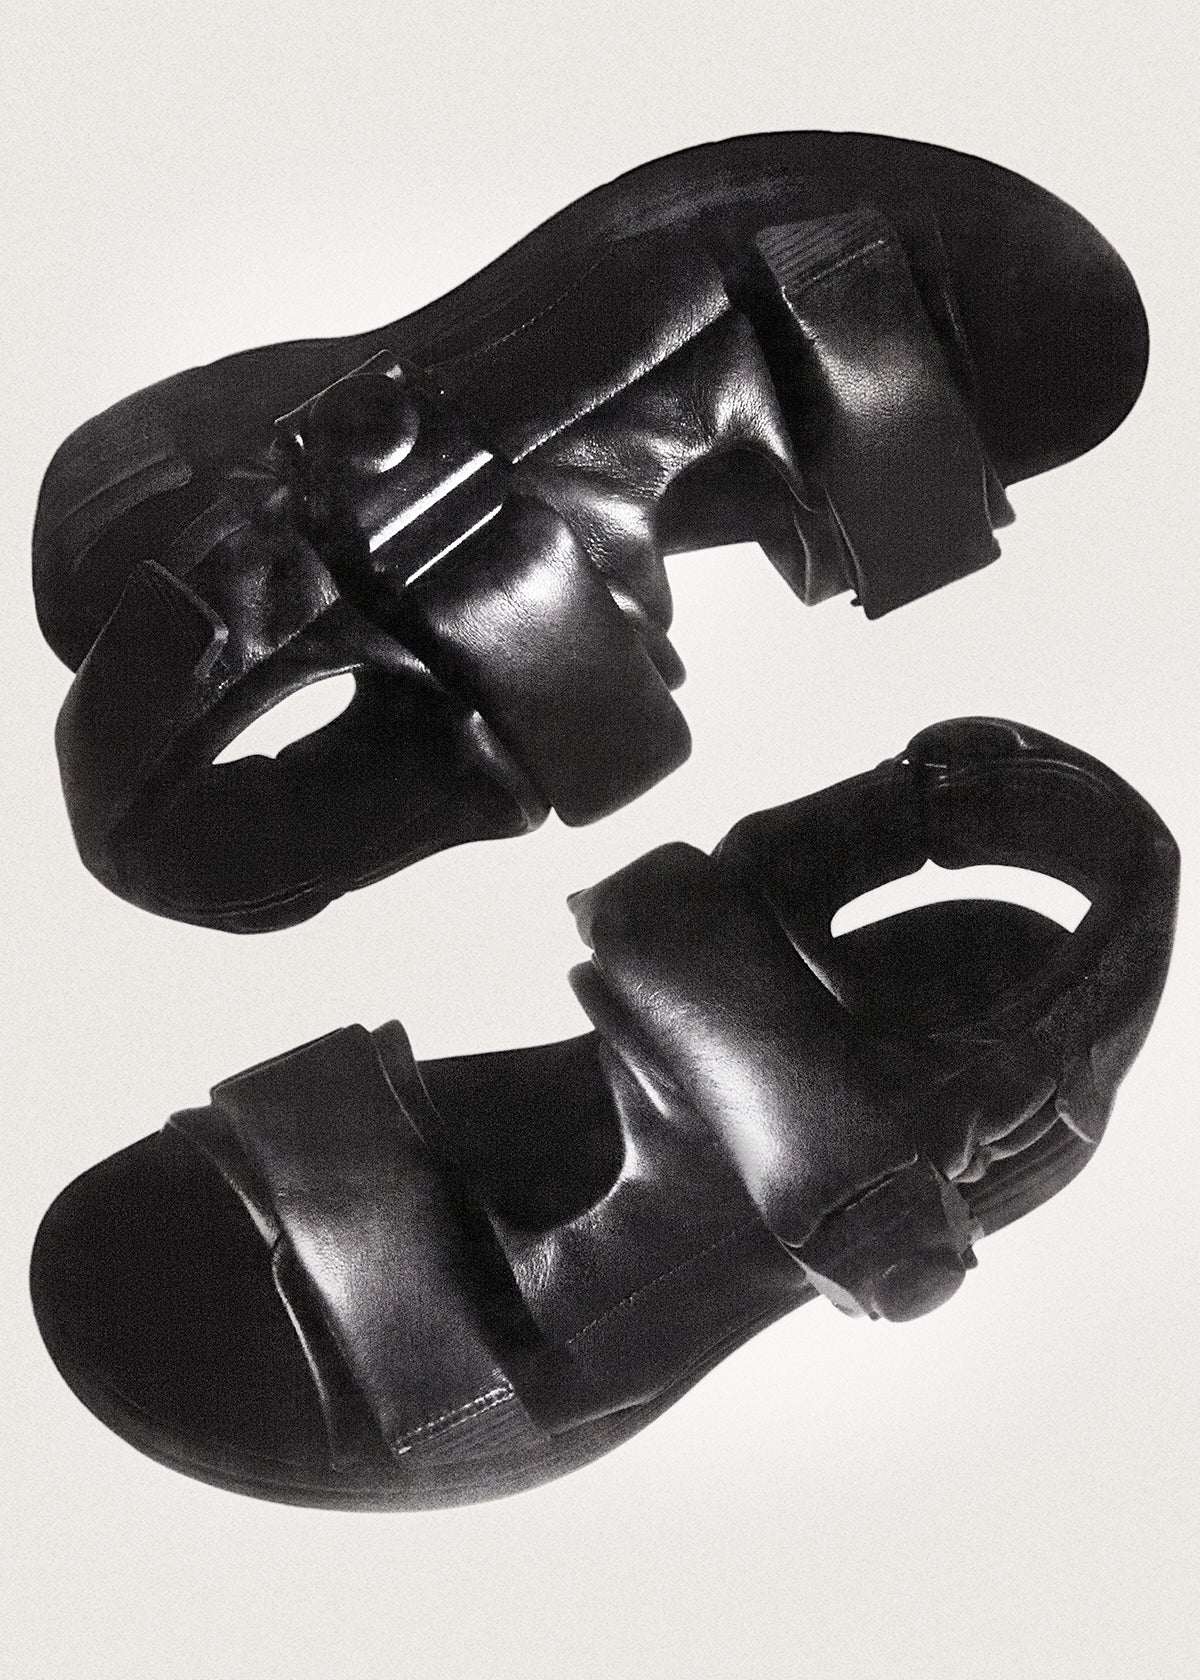 CLARKS LADIES SANDALS - UN ADORN VIBE - in Black Leather UK 5.5 / 39 - New  BNIB £39.99 - PicClick UK